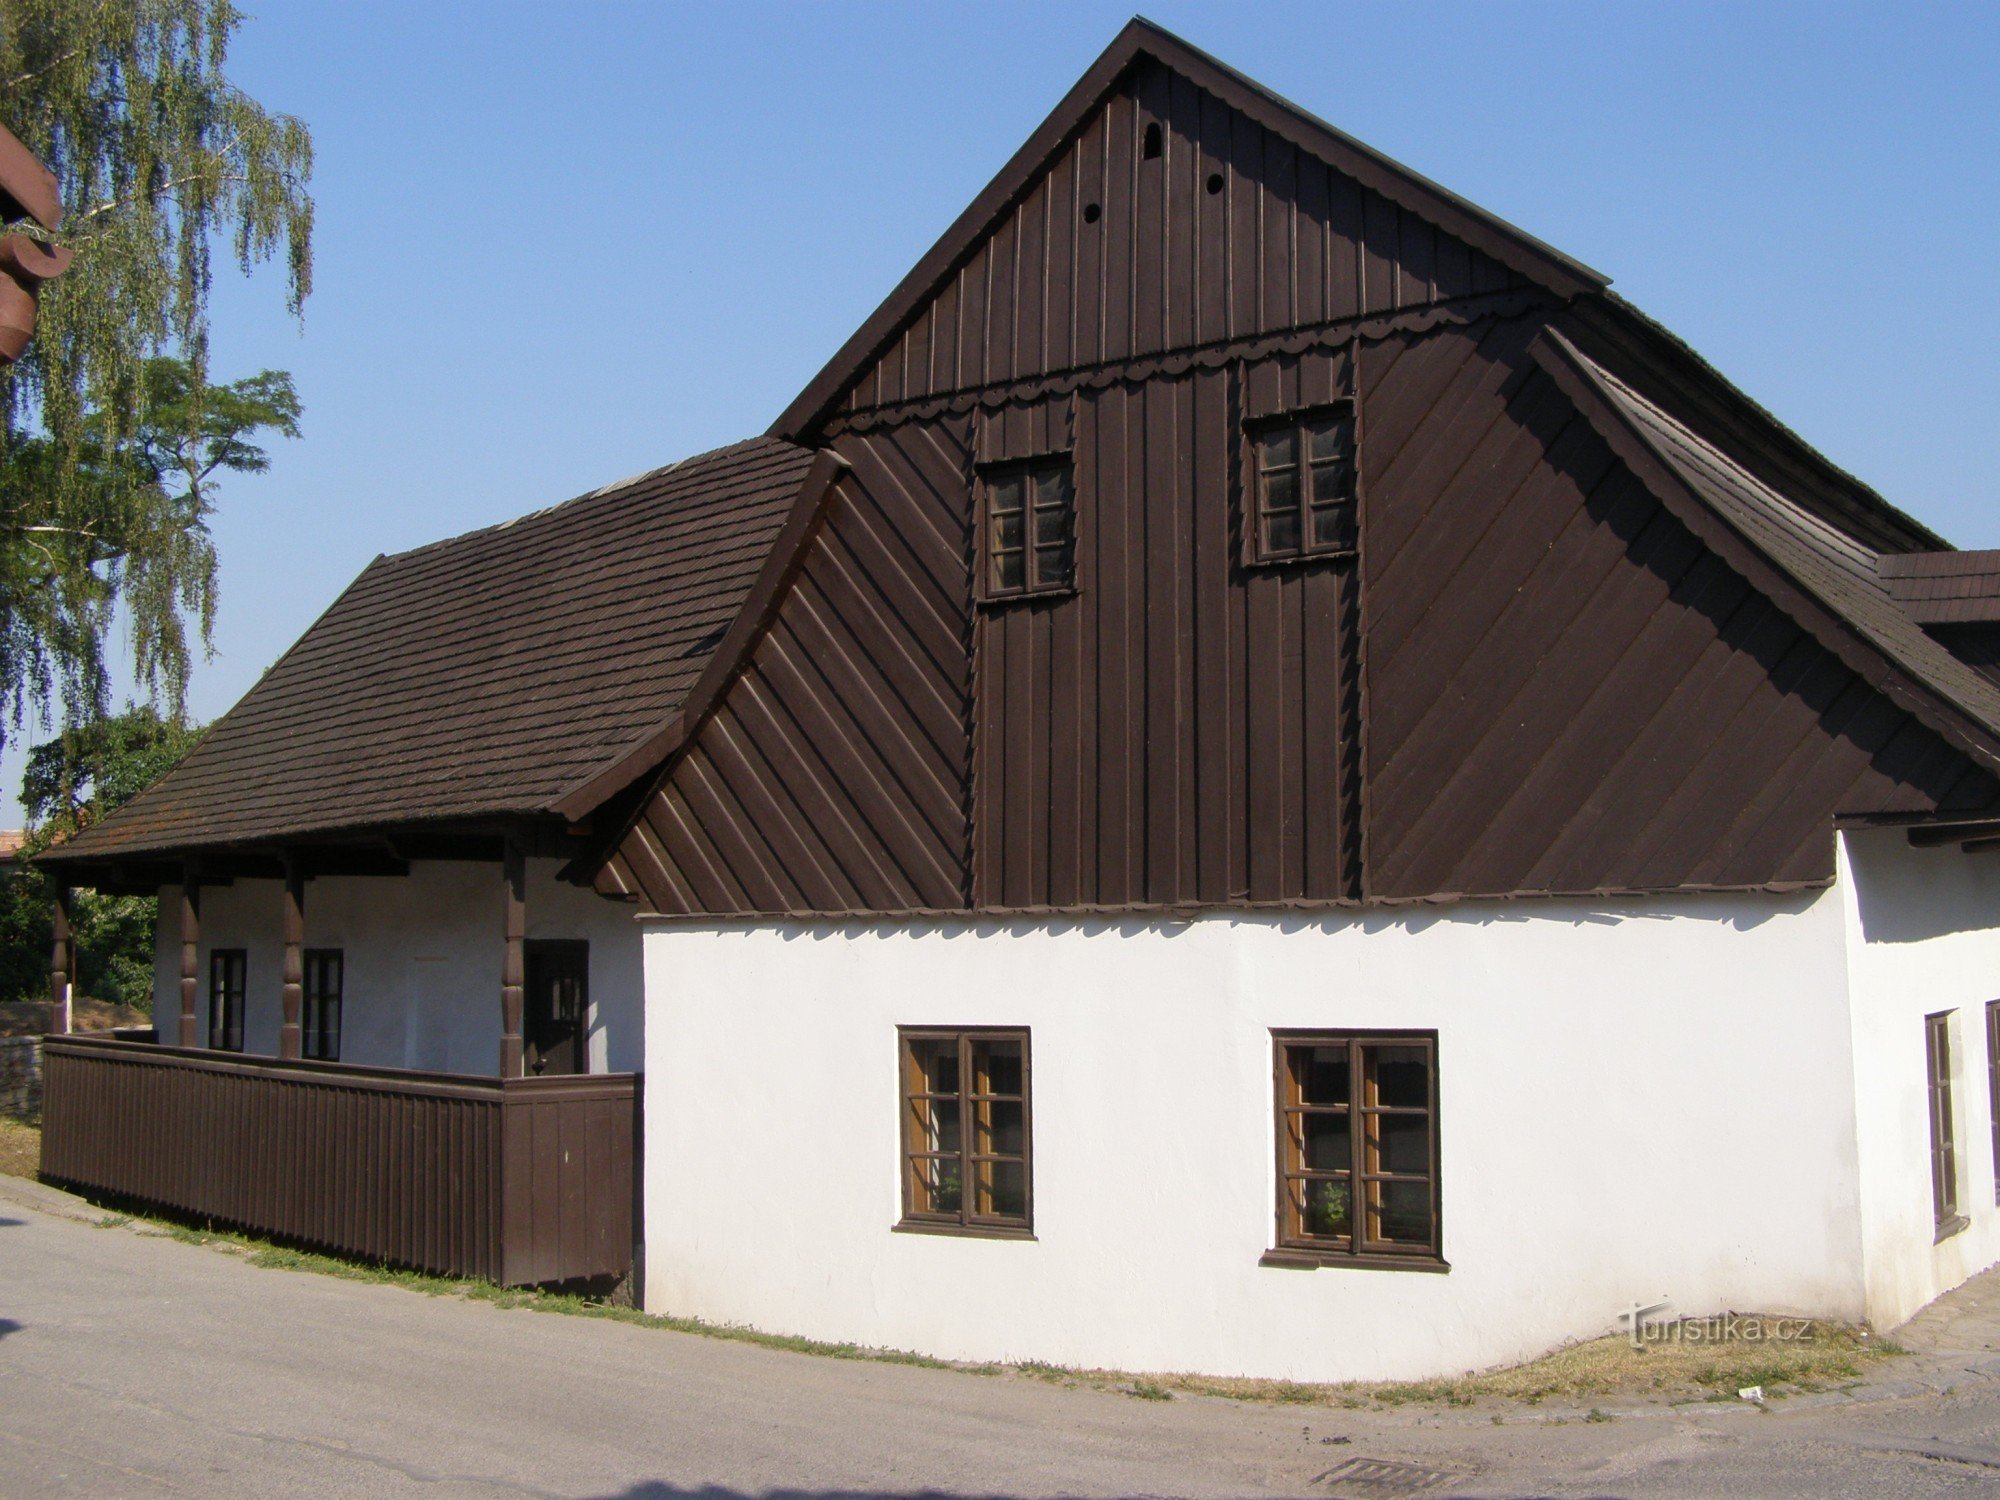 Dobruška - the birthplace of FLHeka